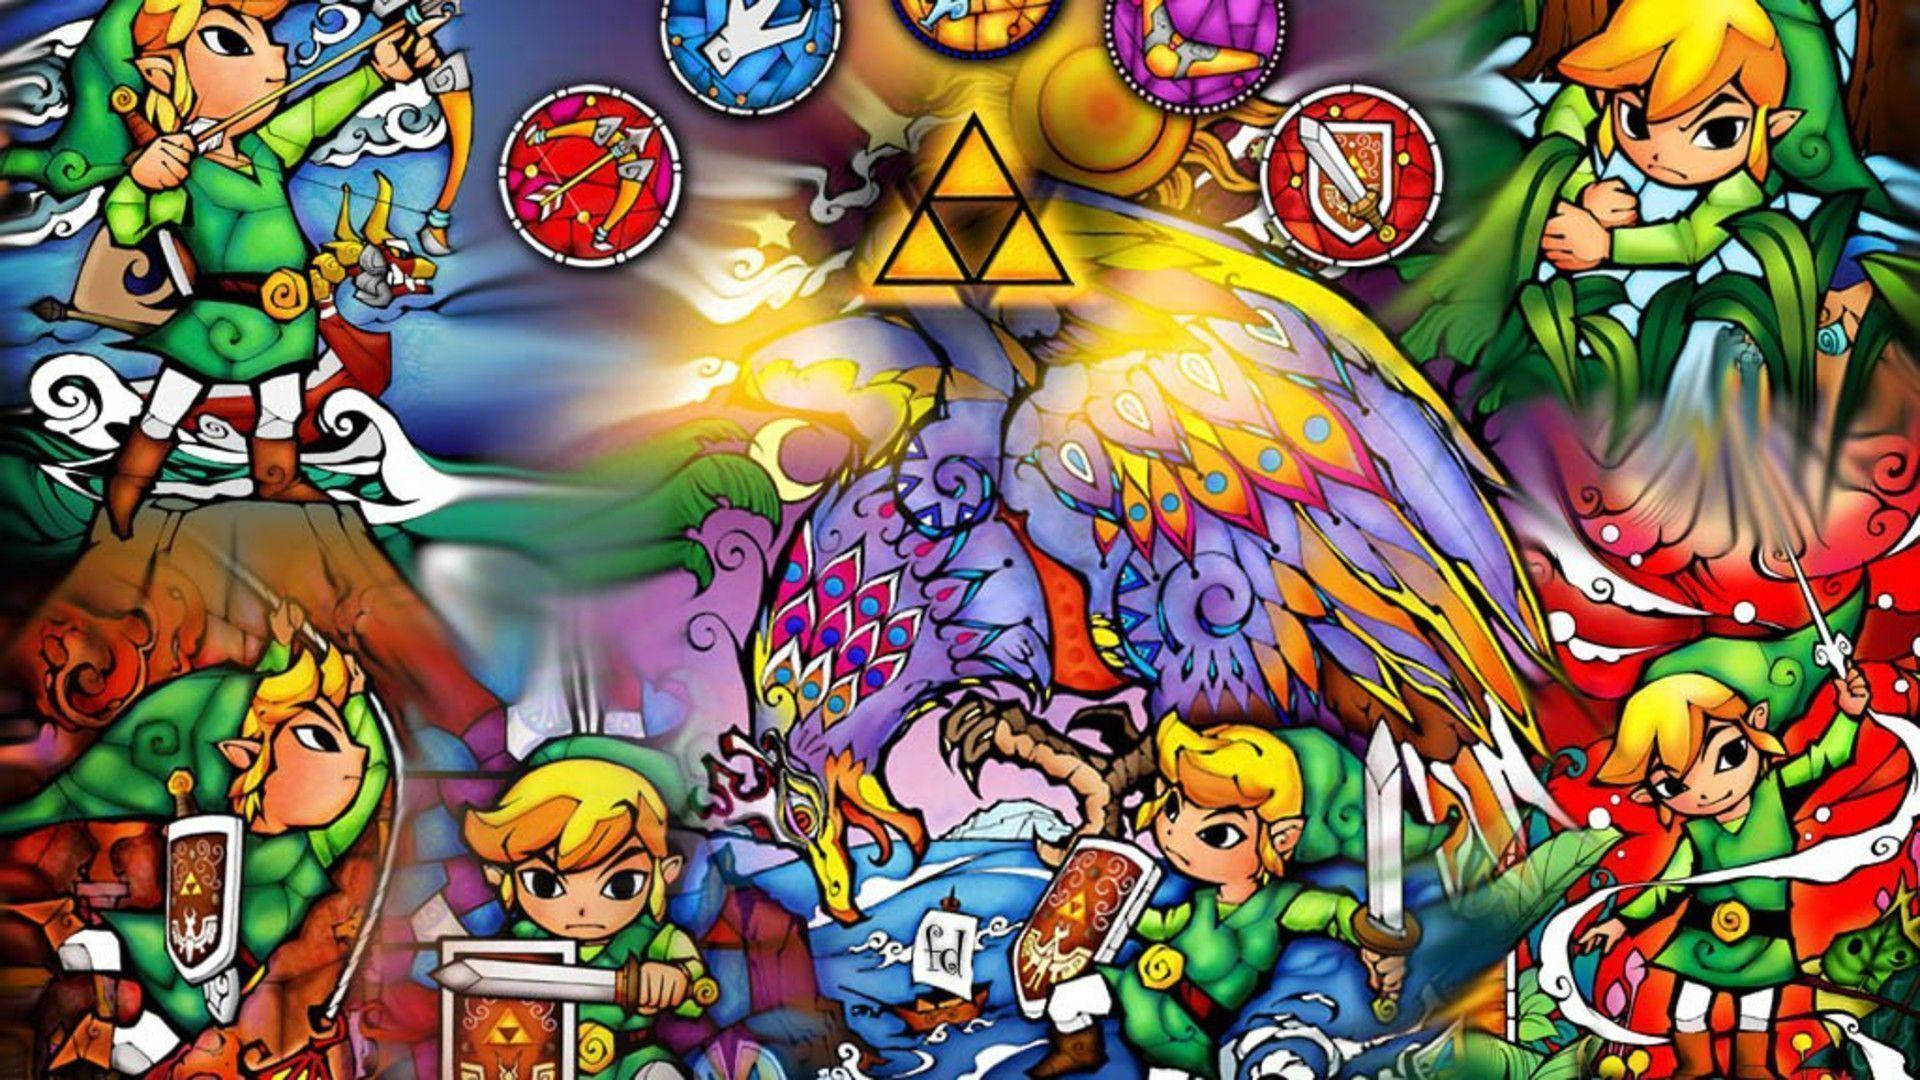 Zelda 1920X1080 Wallpaper and Background Image